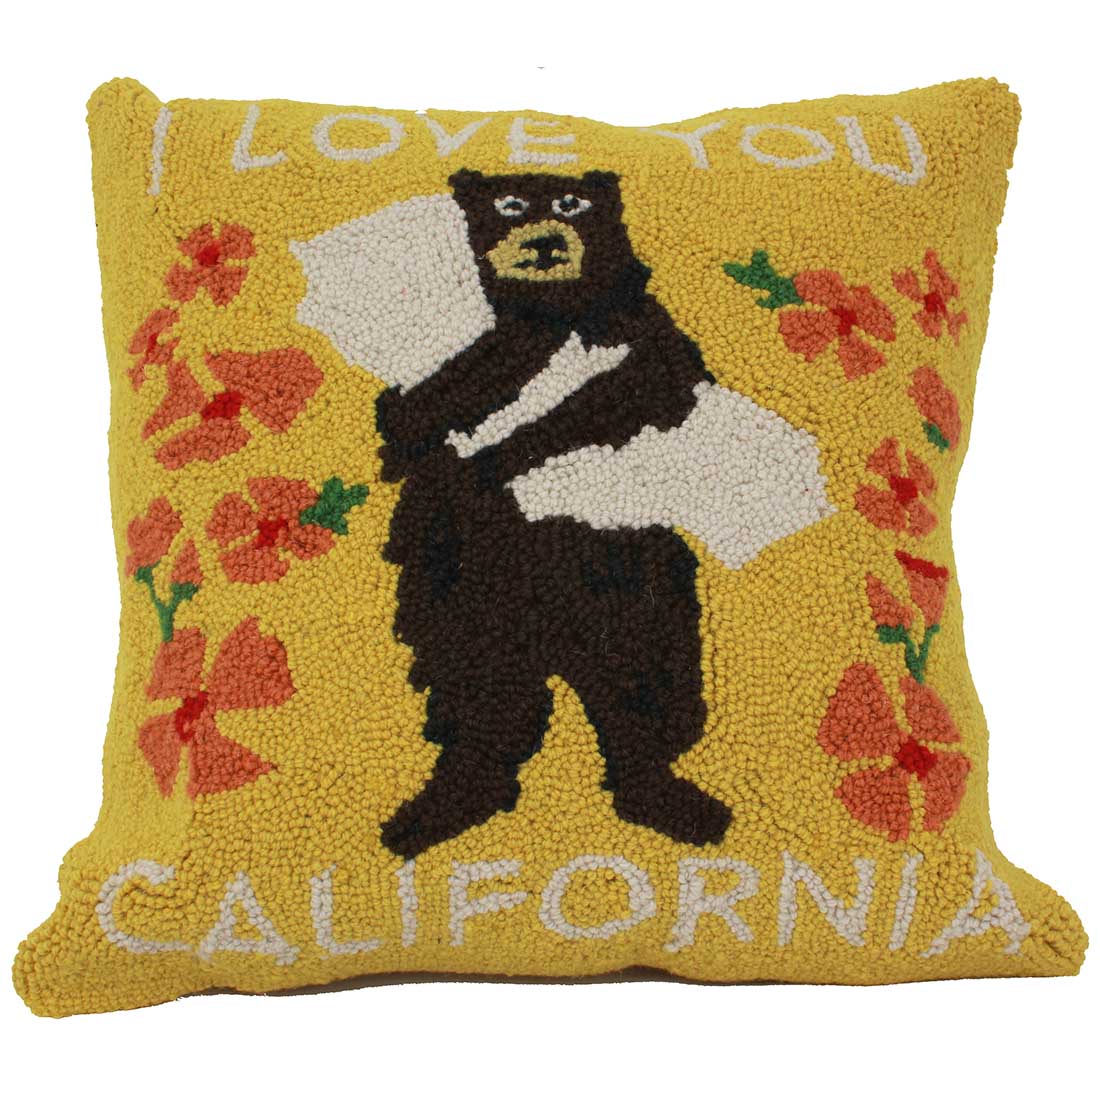 I Love You California Bear Throw Pillow